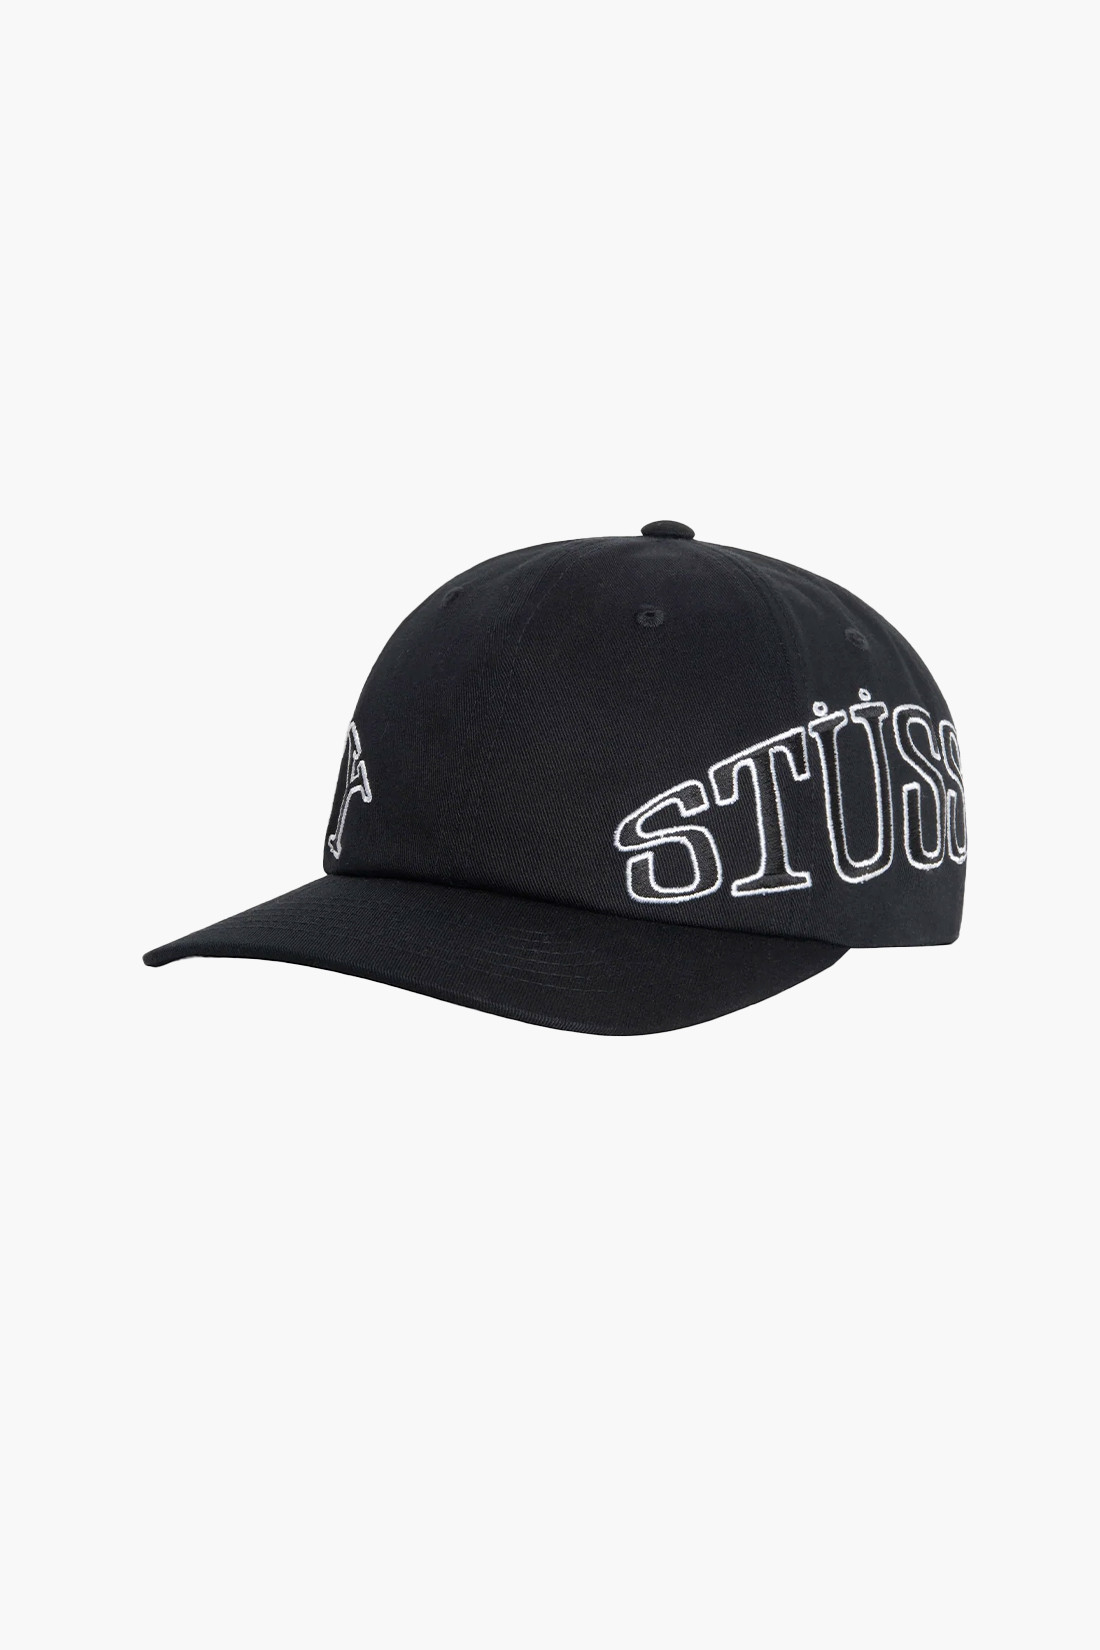 Stussy Arc low pro strapback cap Black - GRADUATE STORE